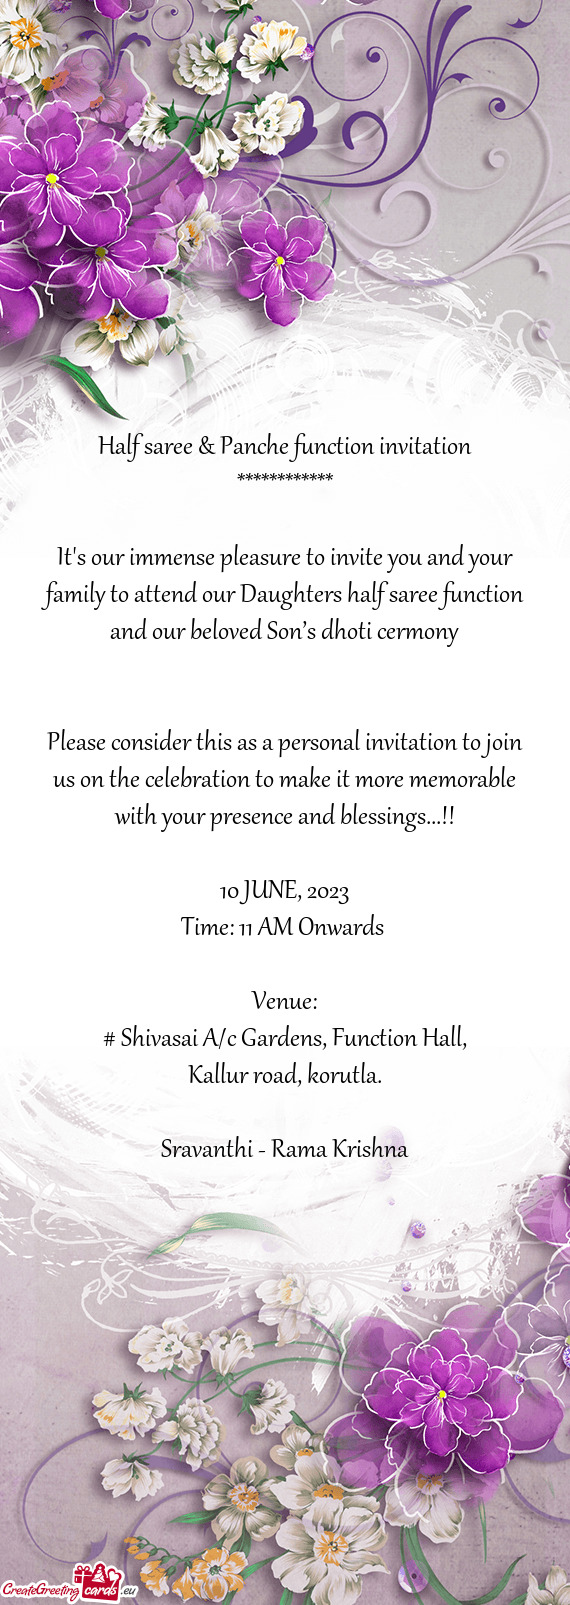 Half saree & Panche function invitation